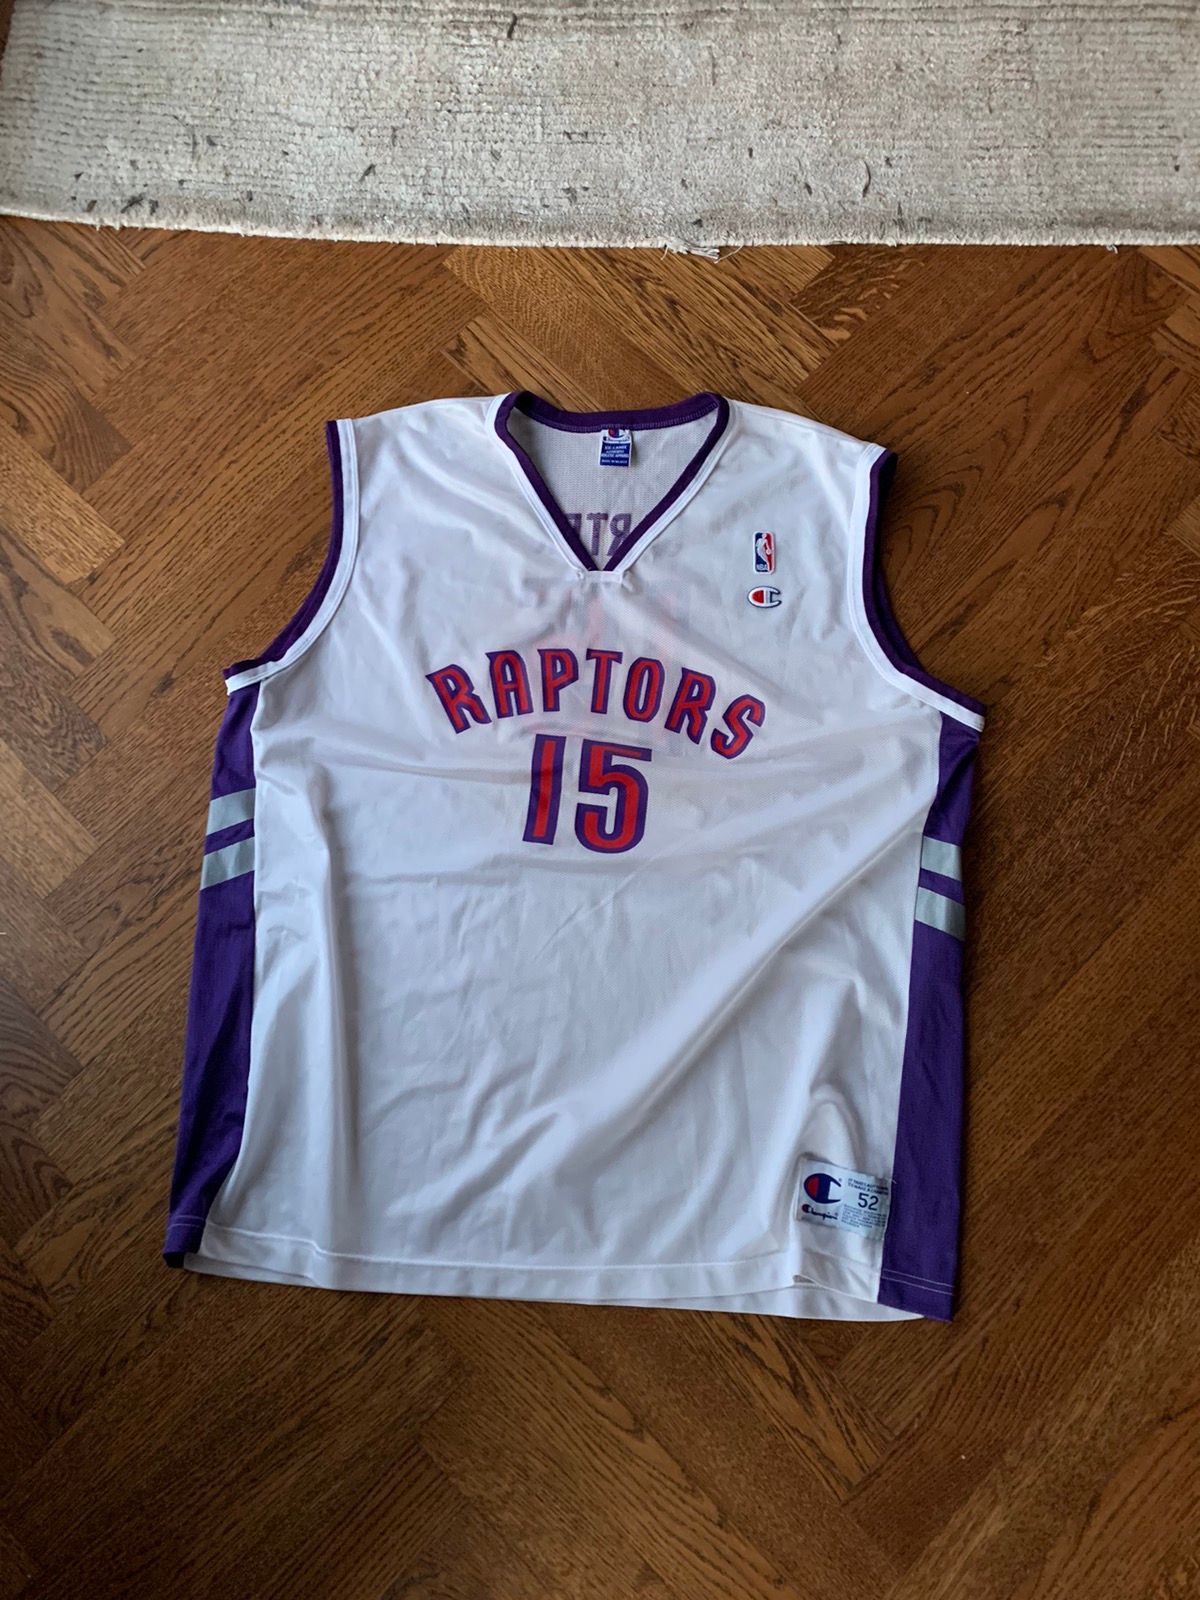 Vintage 90s Vince Carter Toronto Raptors Basketball Jersey Vintage Size US XXL / EU 58 / 5 - 1 Preview